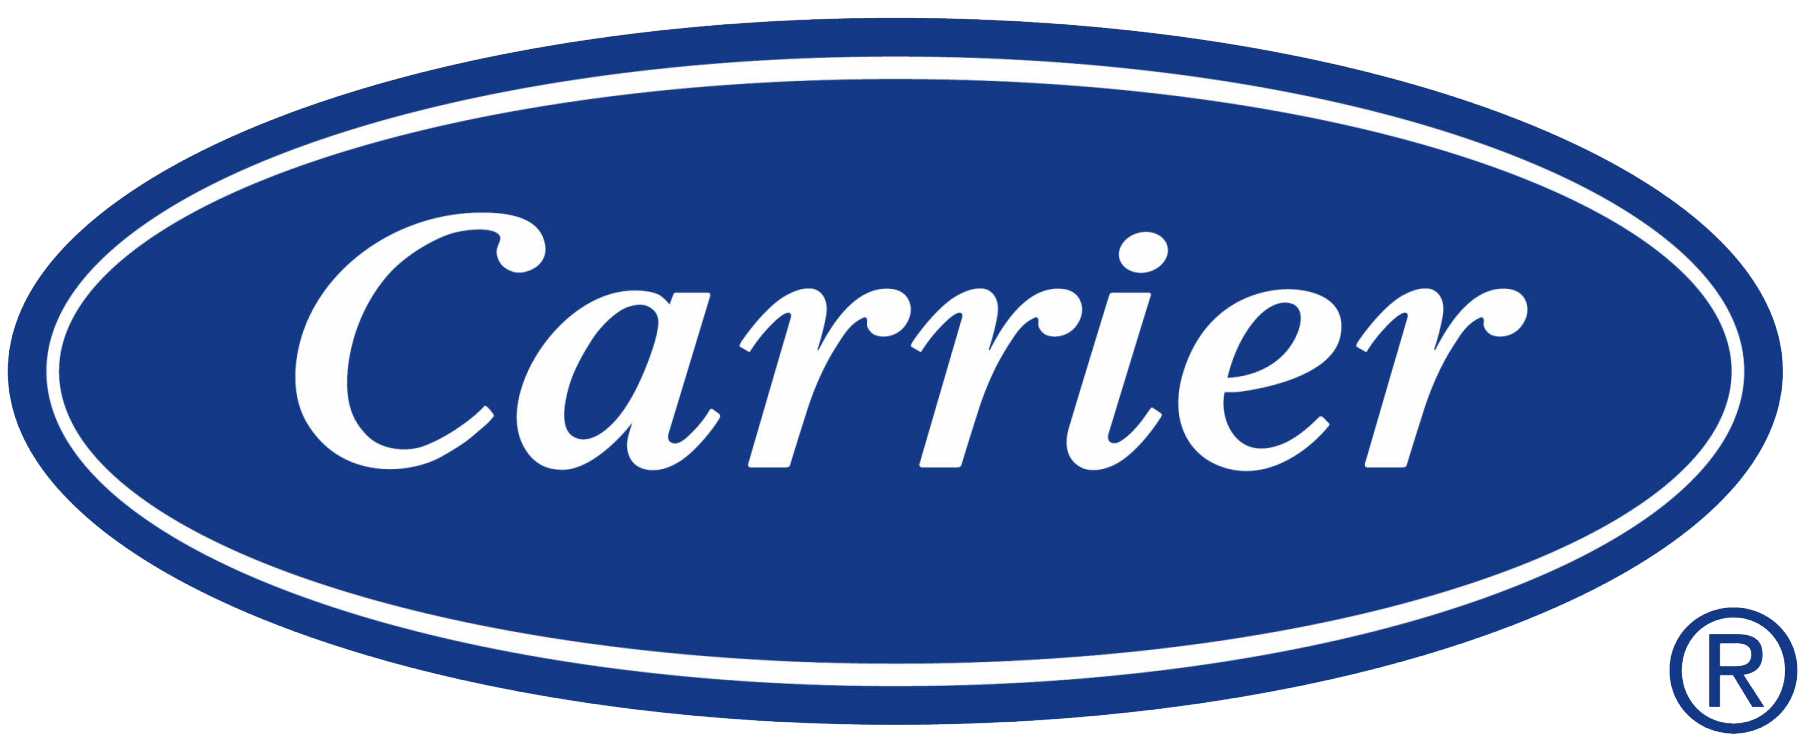 логотип carrier